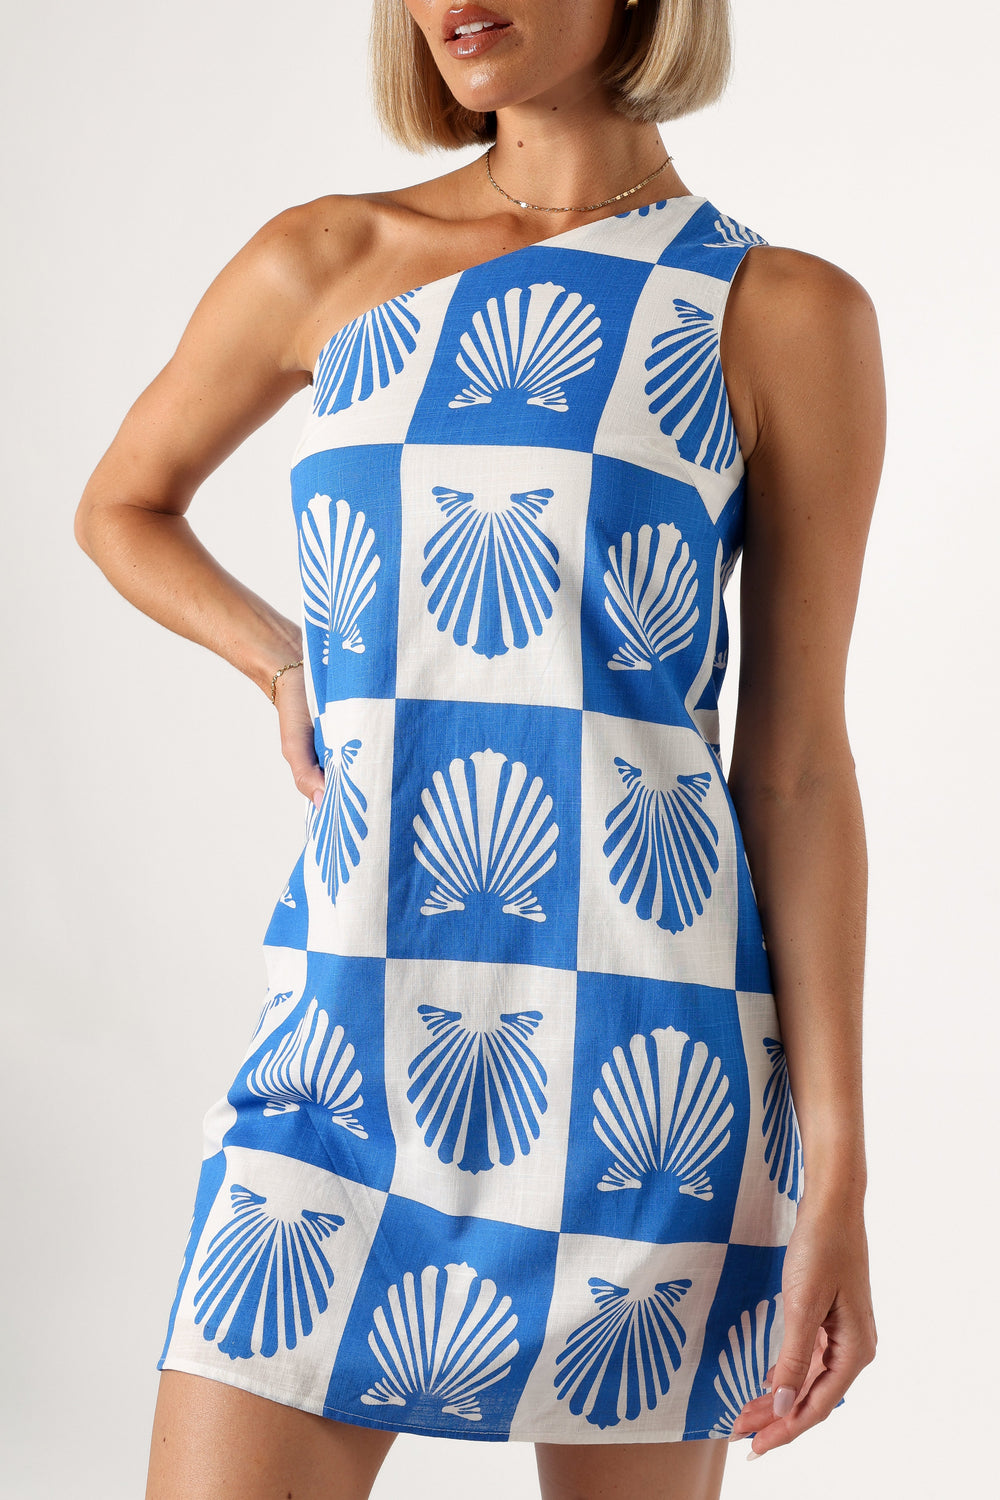 DRESSES @Matteo One Shoulder Mini Dress - Blue Print